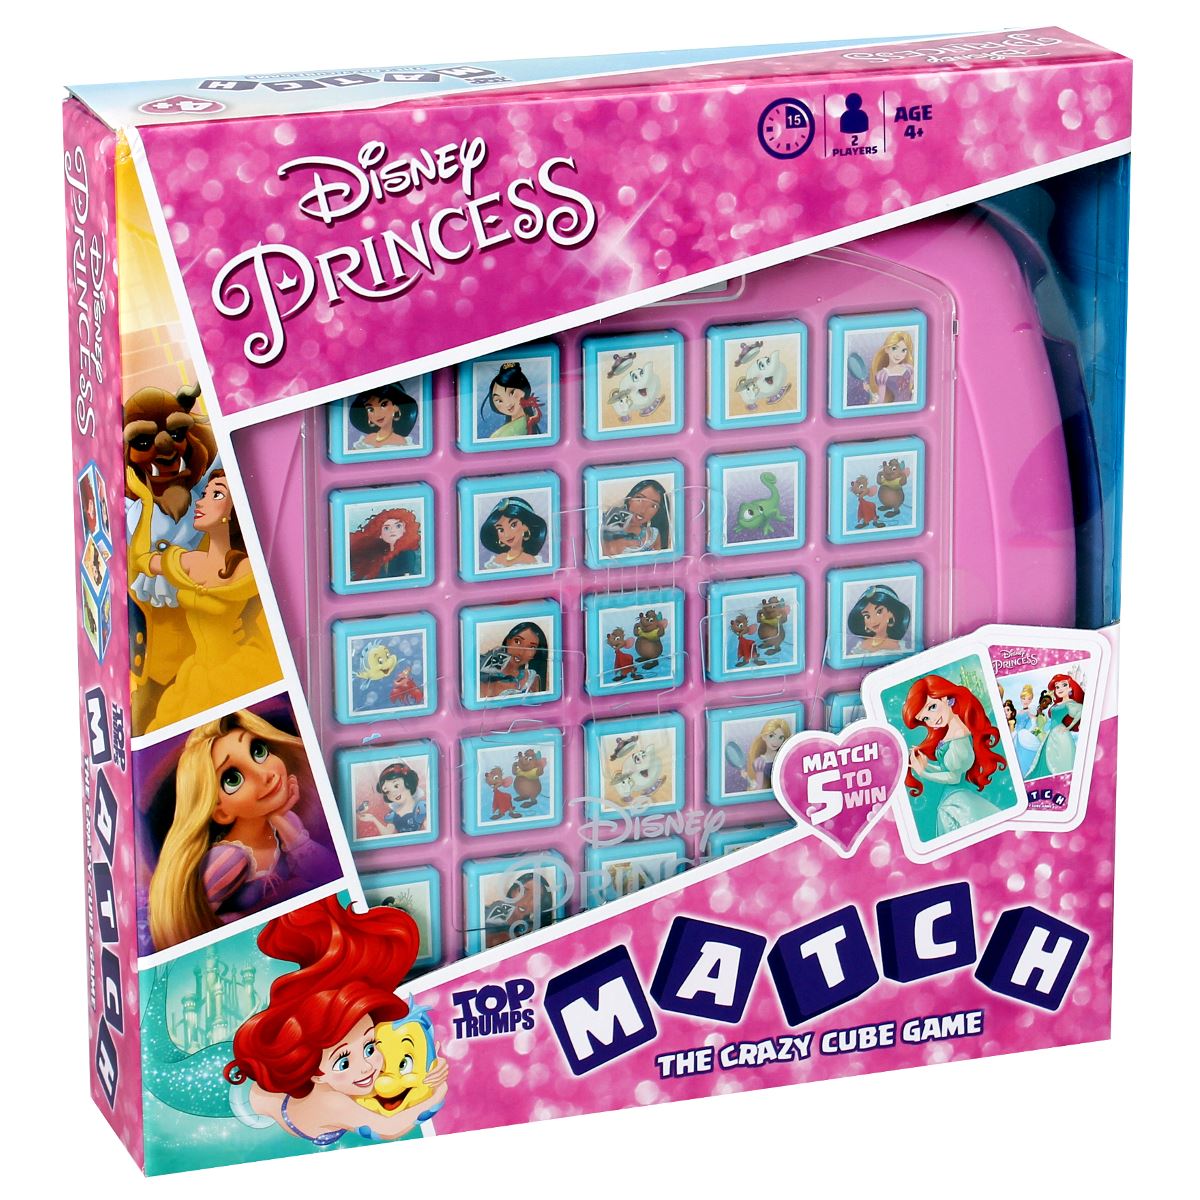 Disney Princess Top Trumps Match - The Crazy Cube Game